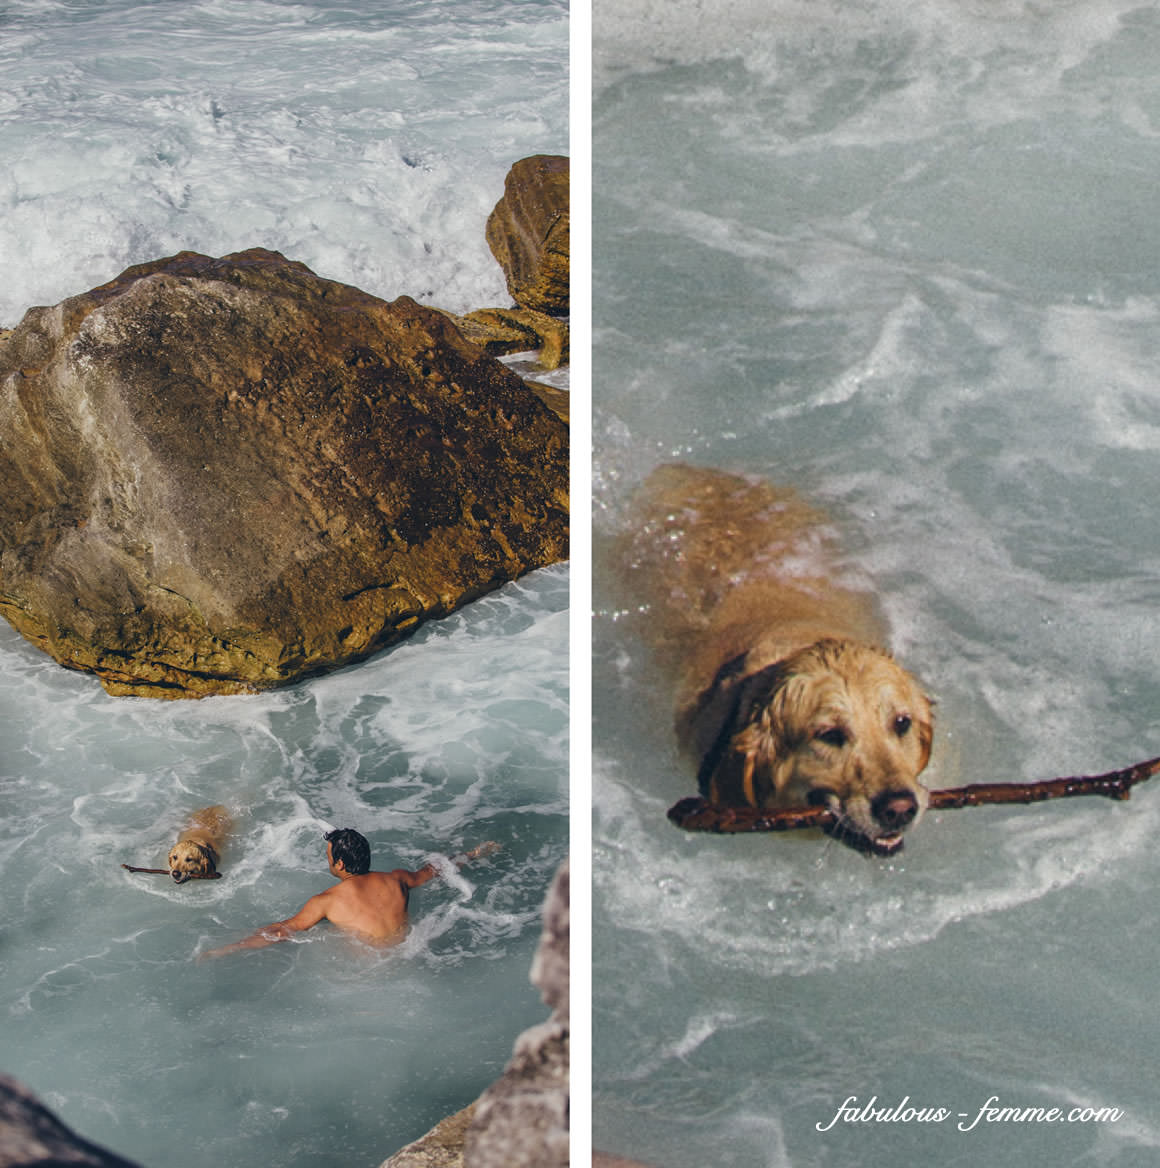 dog swimming in ocean